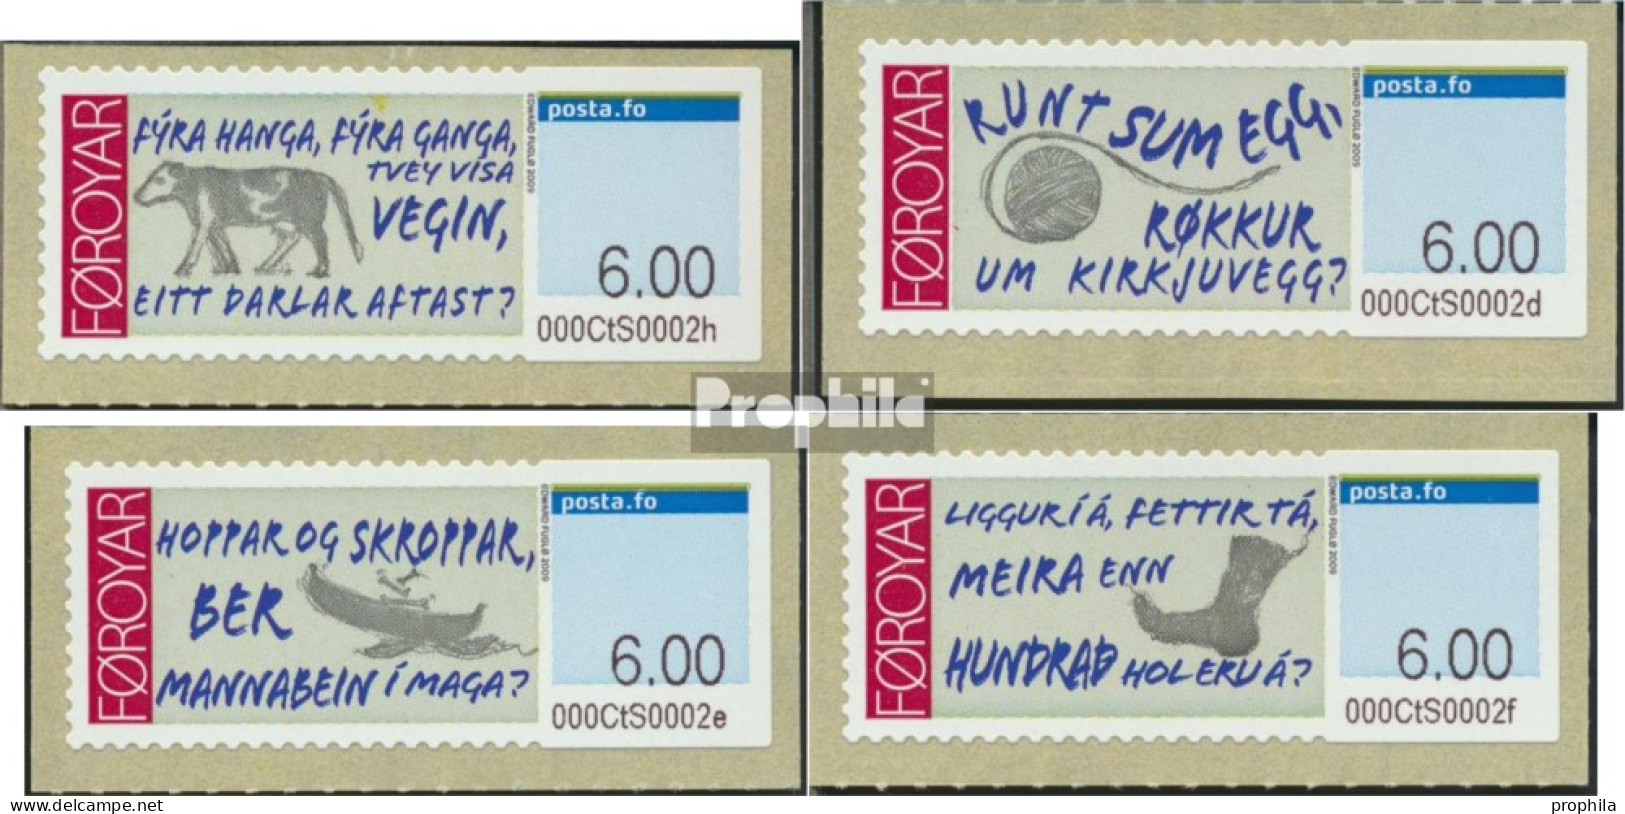 Dänemark - Färöer ATM5-ATM8 (kompl.Ausg.) Postfrisch 2009 Automartenmarken Rätsel - Féroé (Iles)